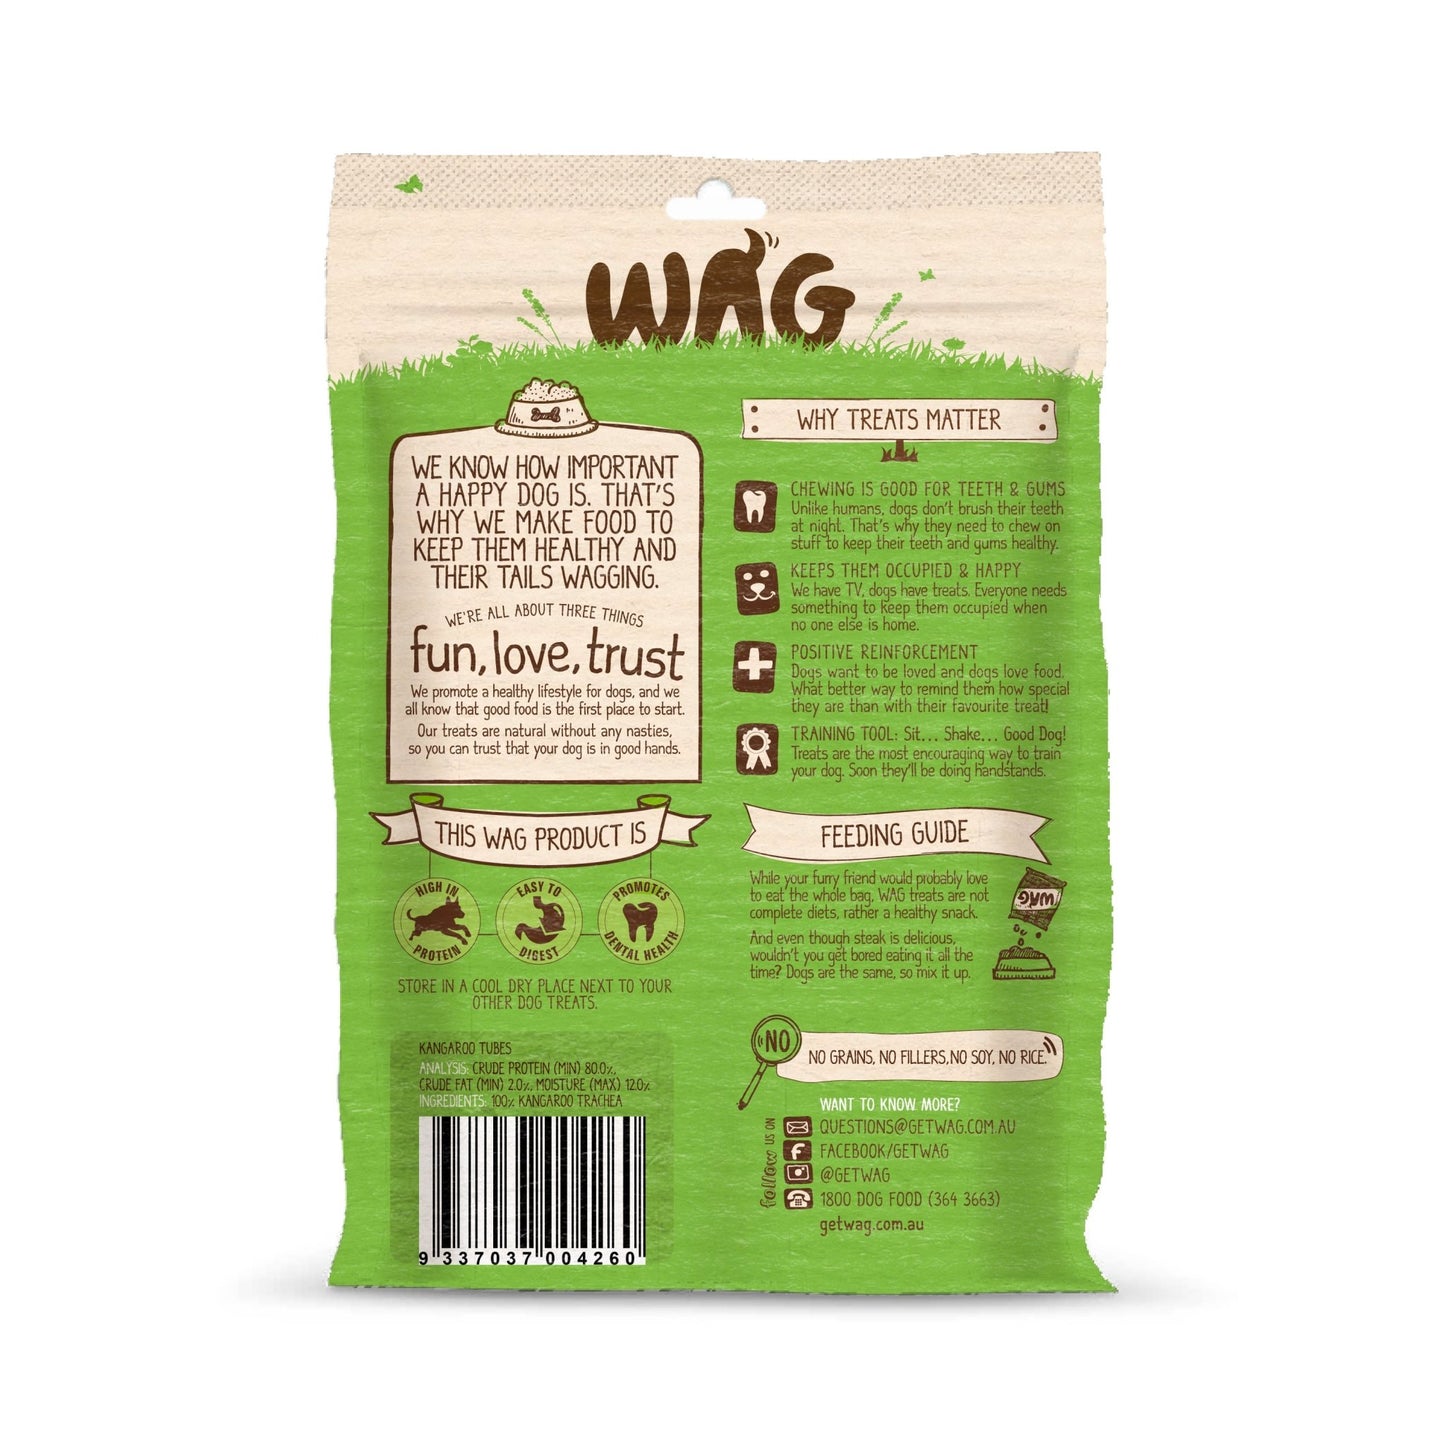 WAG Kangaroo Tubes 200g - Woonona Petfood & Produce